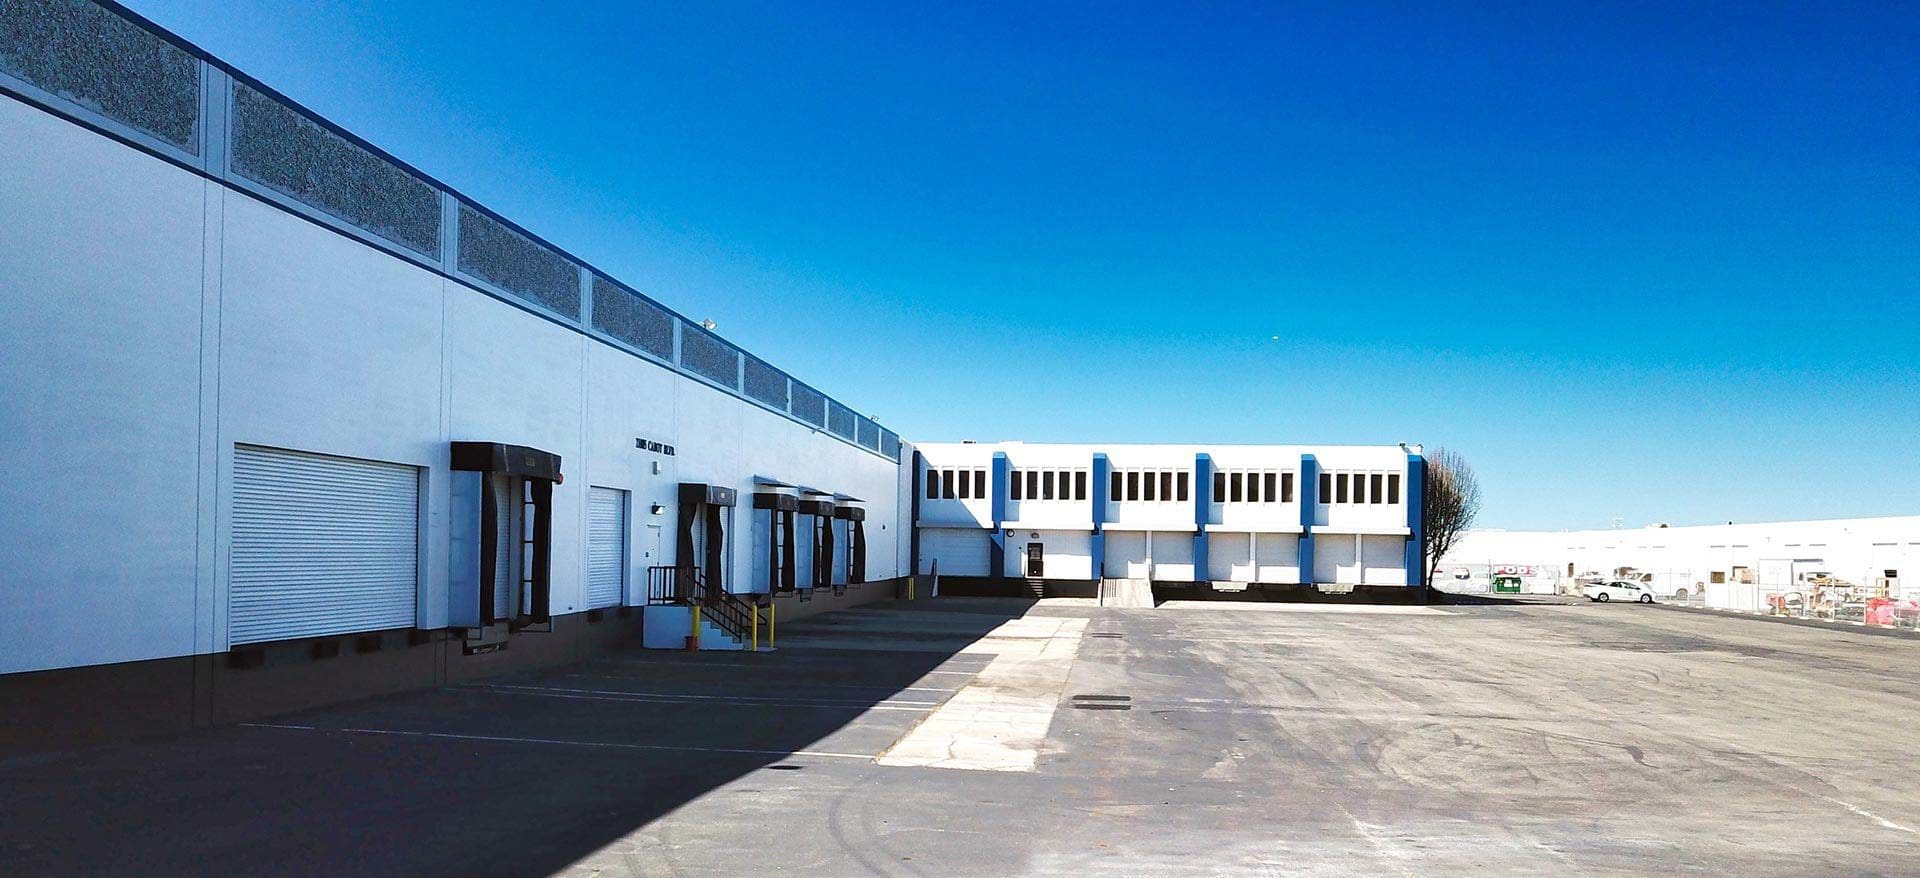 Cabot Distribution Center exterior loading dock photo